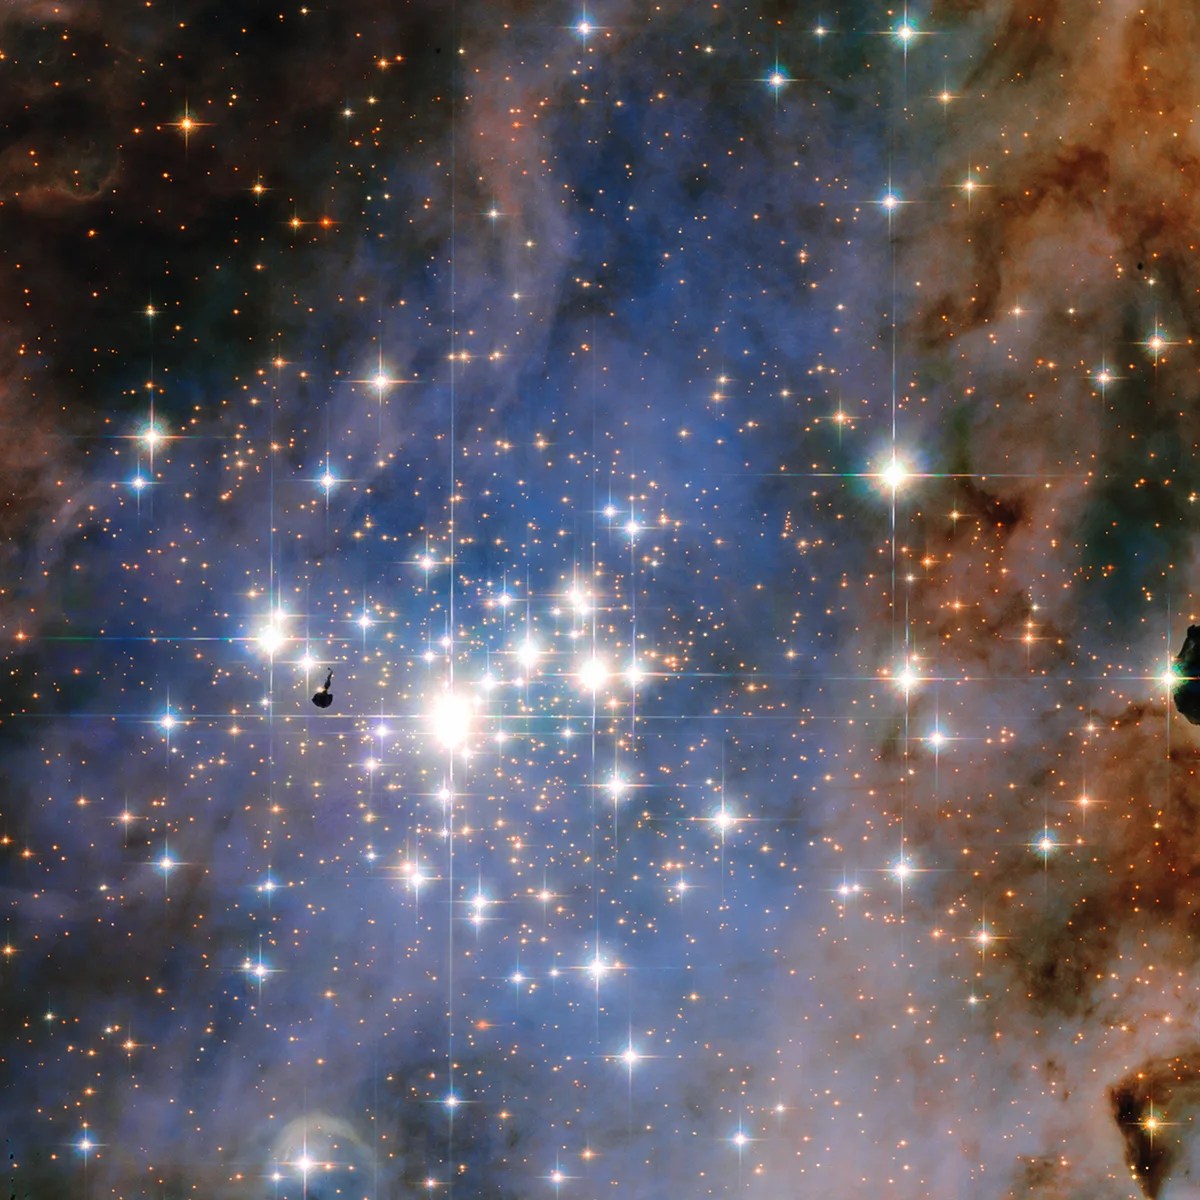 A glittering star cluster